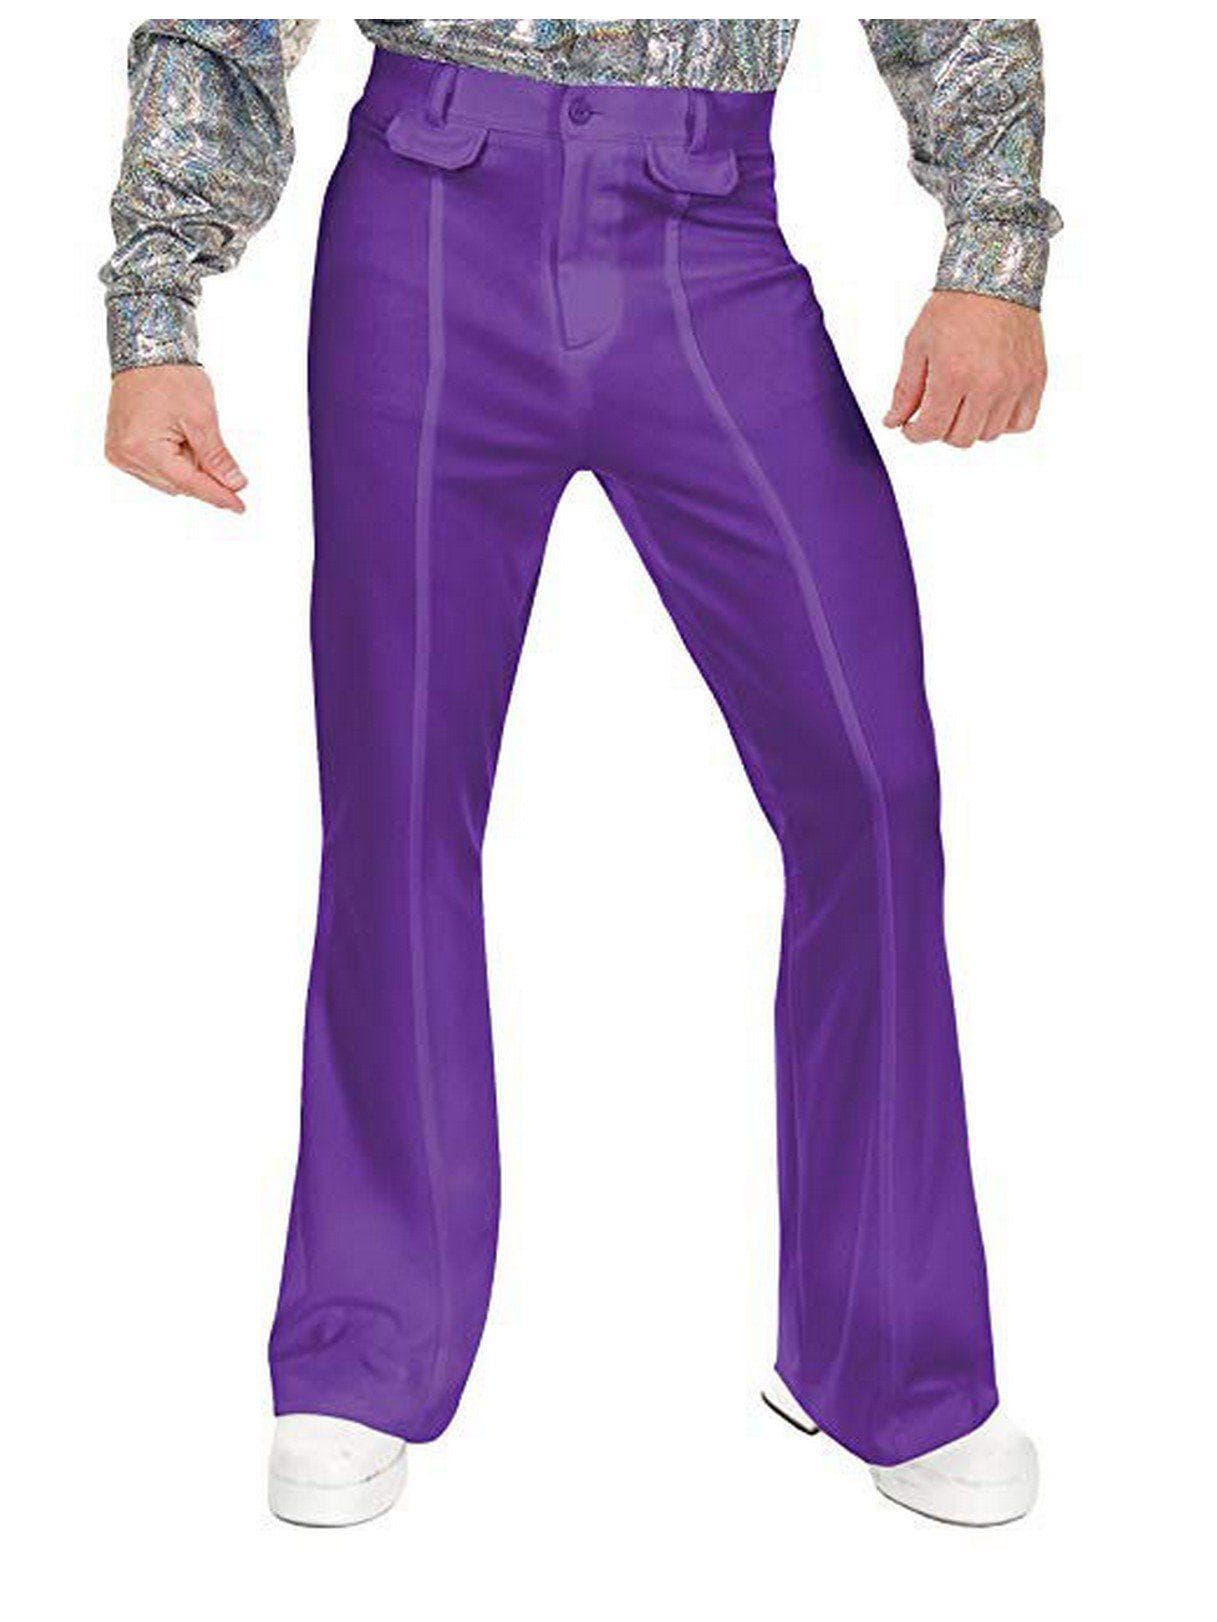 Adult Disco Pants Purple Costume - costumes.com